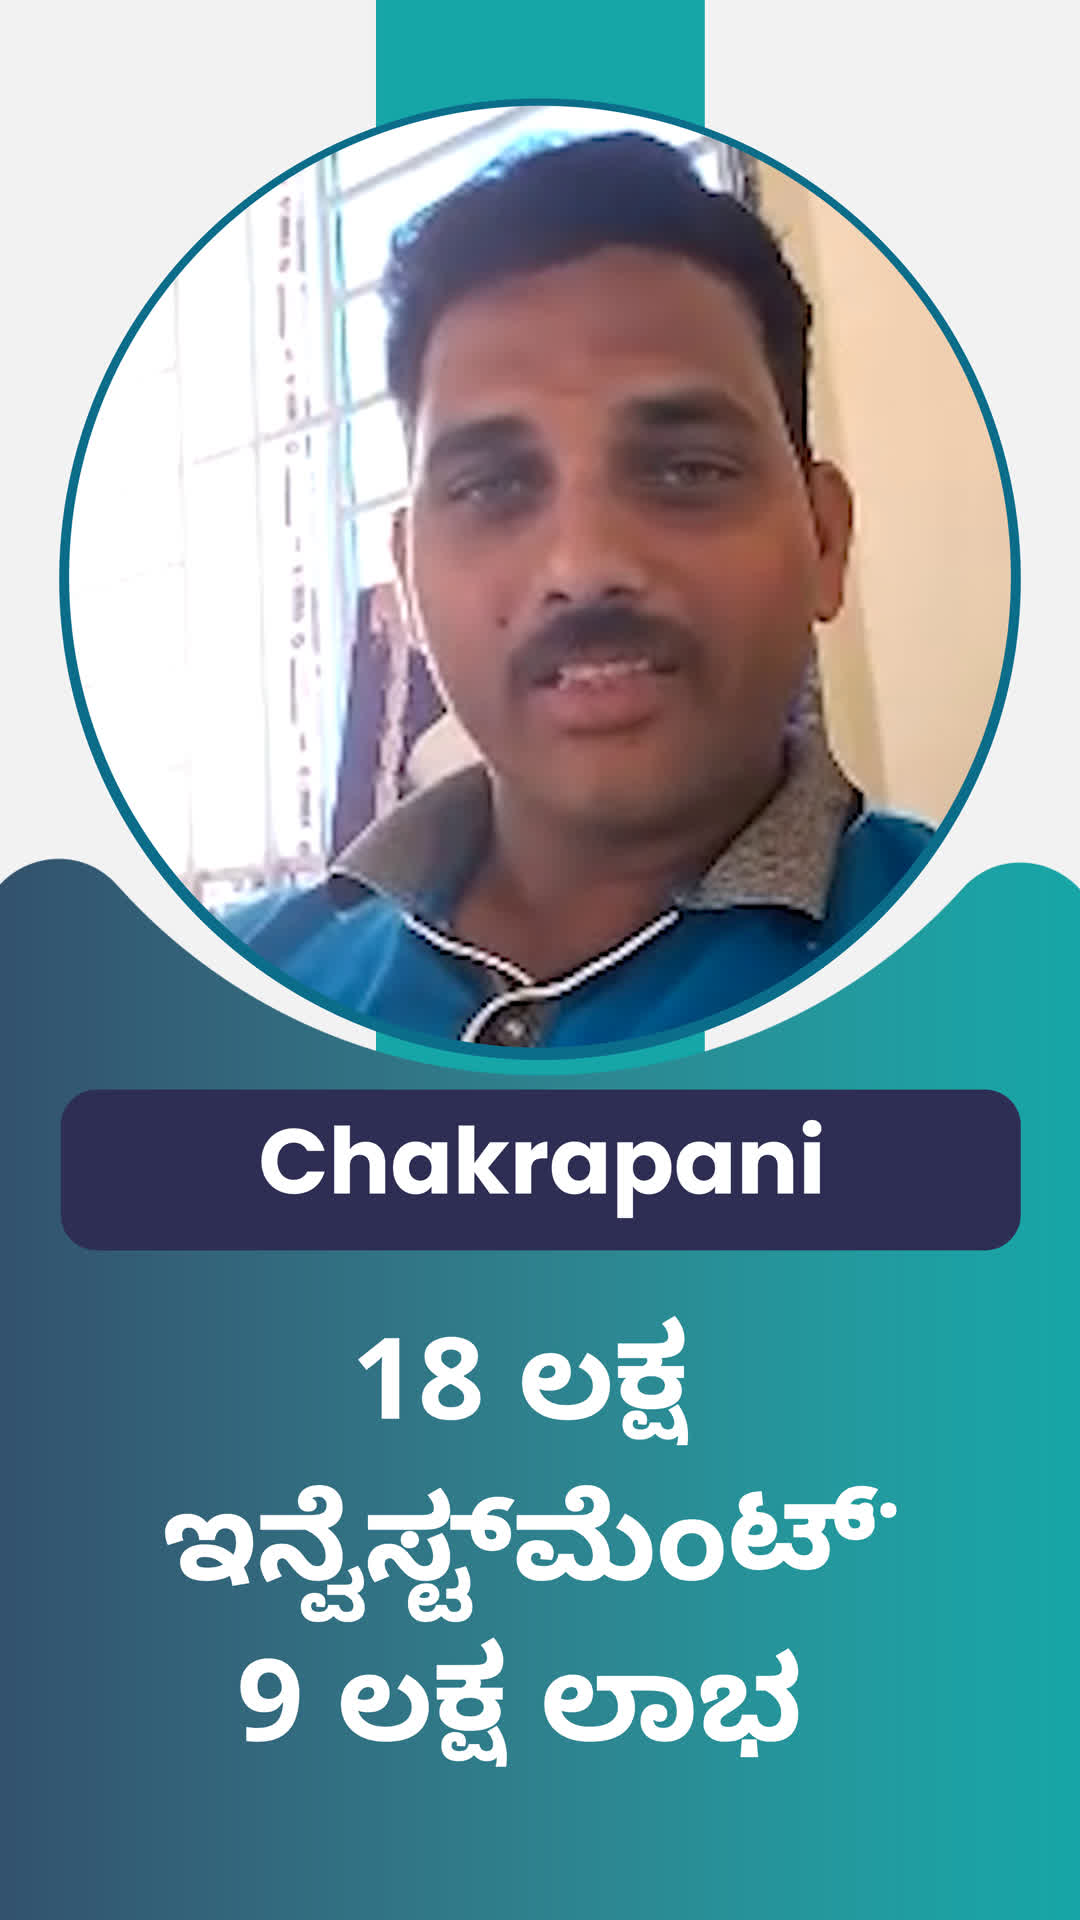 Chakrapaani K's Honest Review of ffreedom app - Chitradurga ,Karnataka